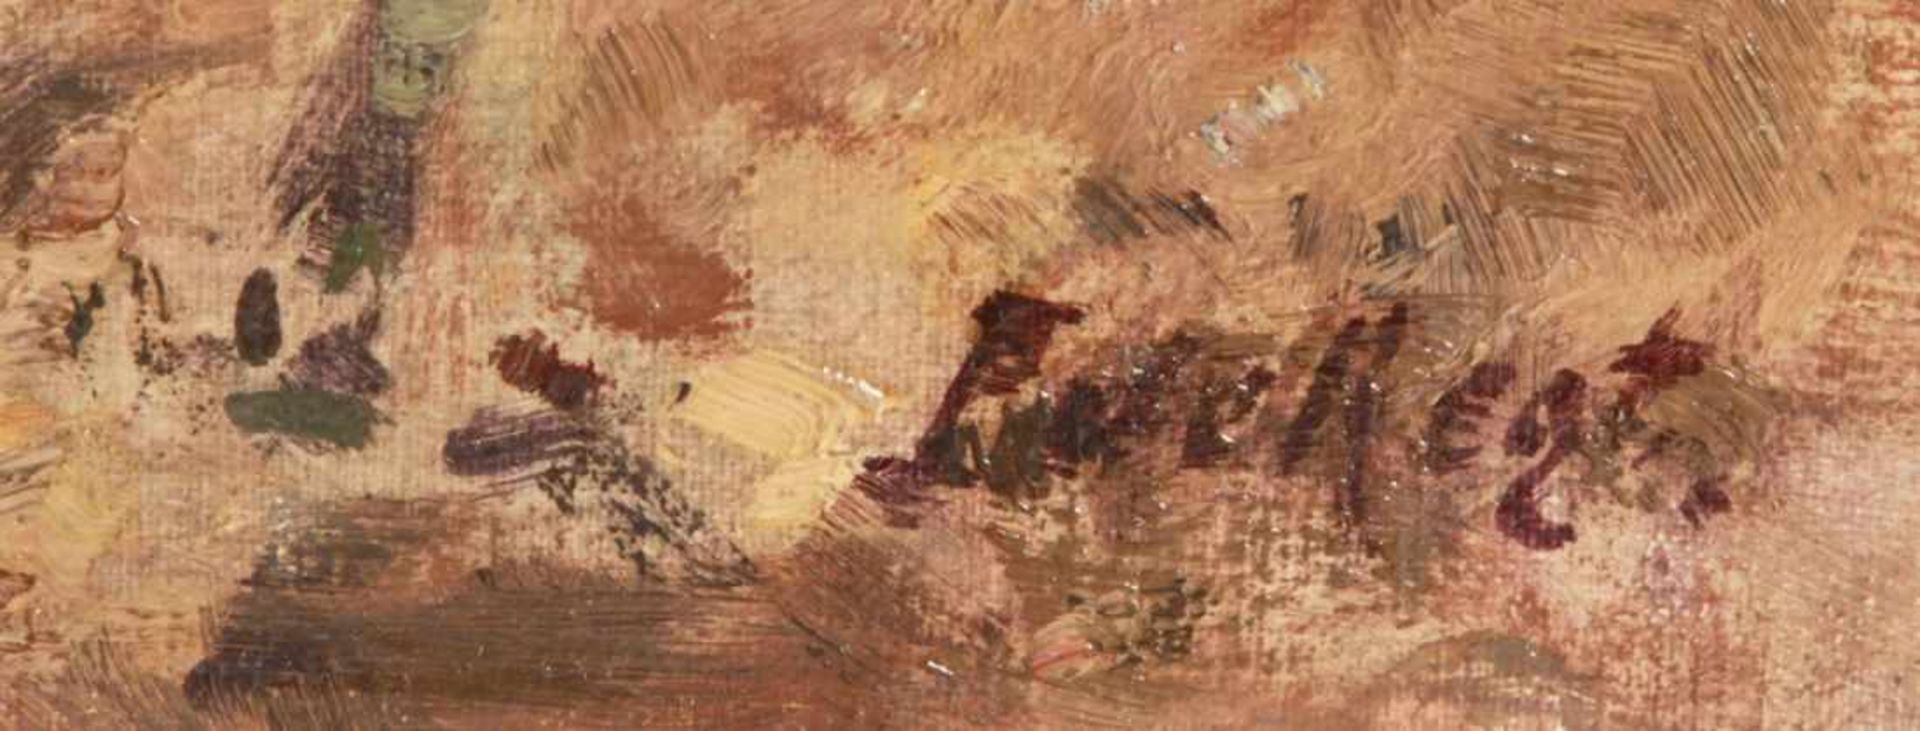 Regt, Pieter de, holländischer Maler 1877 - 1960. "Herbstlicher Weg", sign., Öl/Lw. aufHolz, 40 x 60 - Bild 2 aus 2